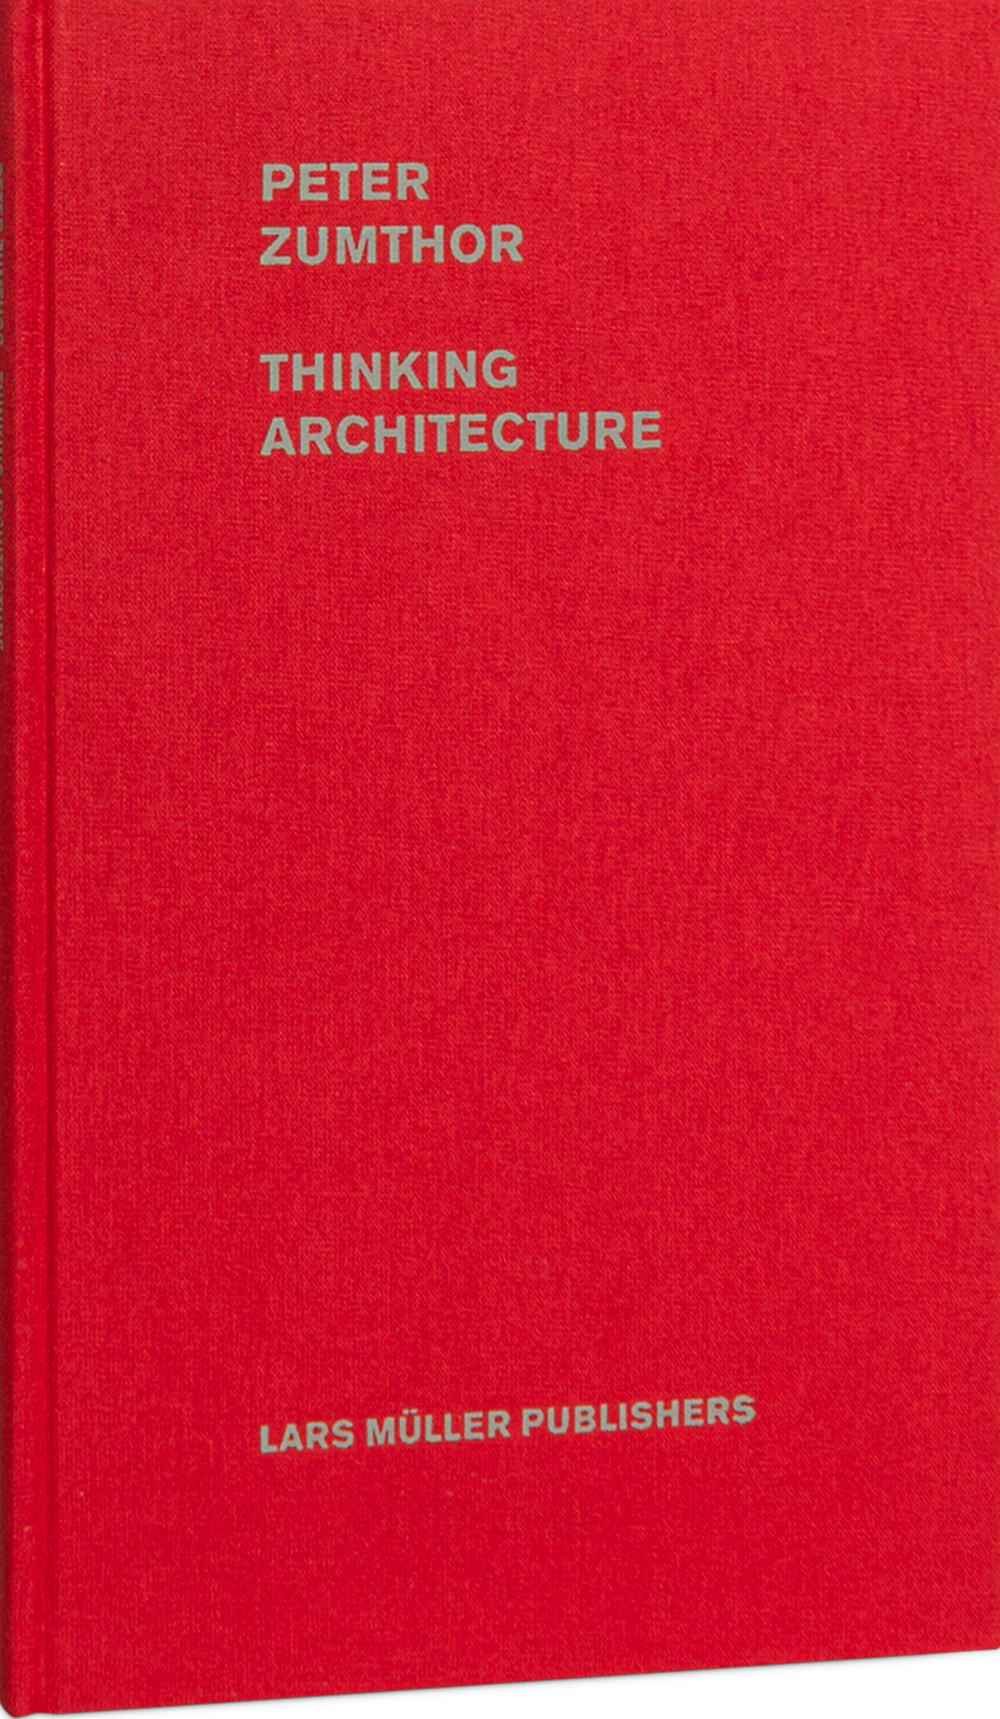 Thinking Architecture | Lars Müller Publishers